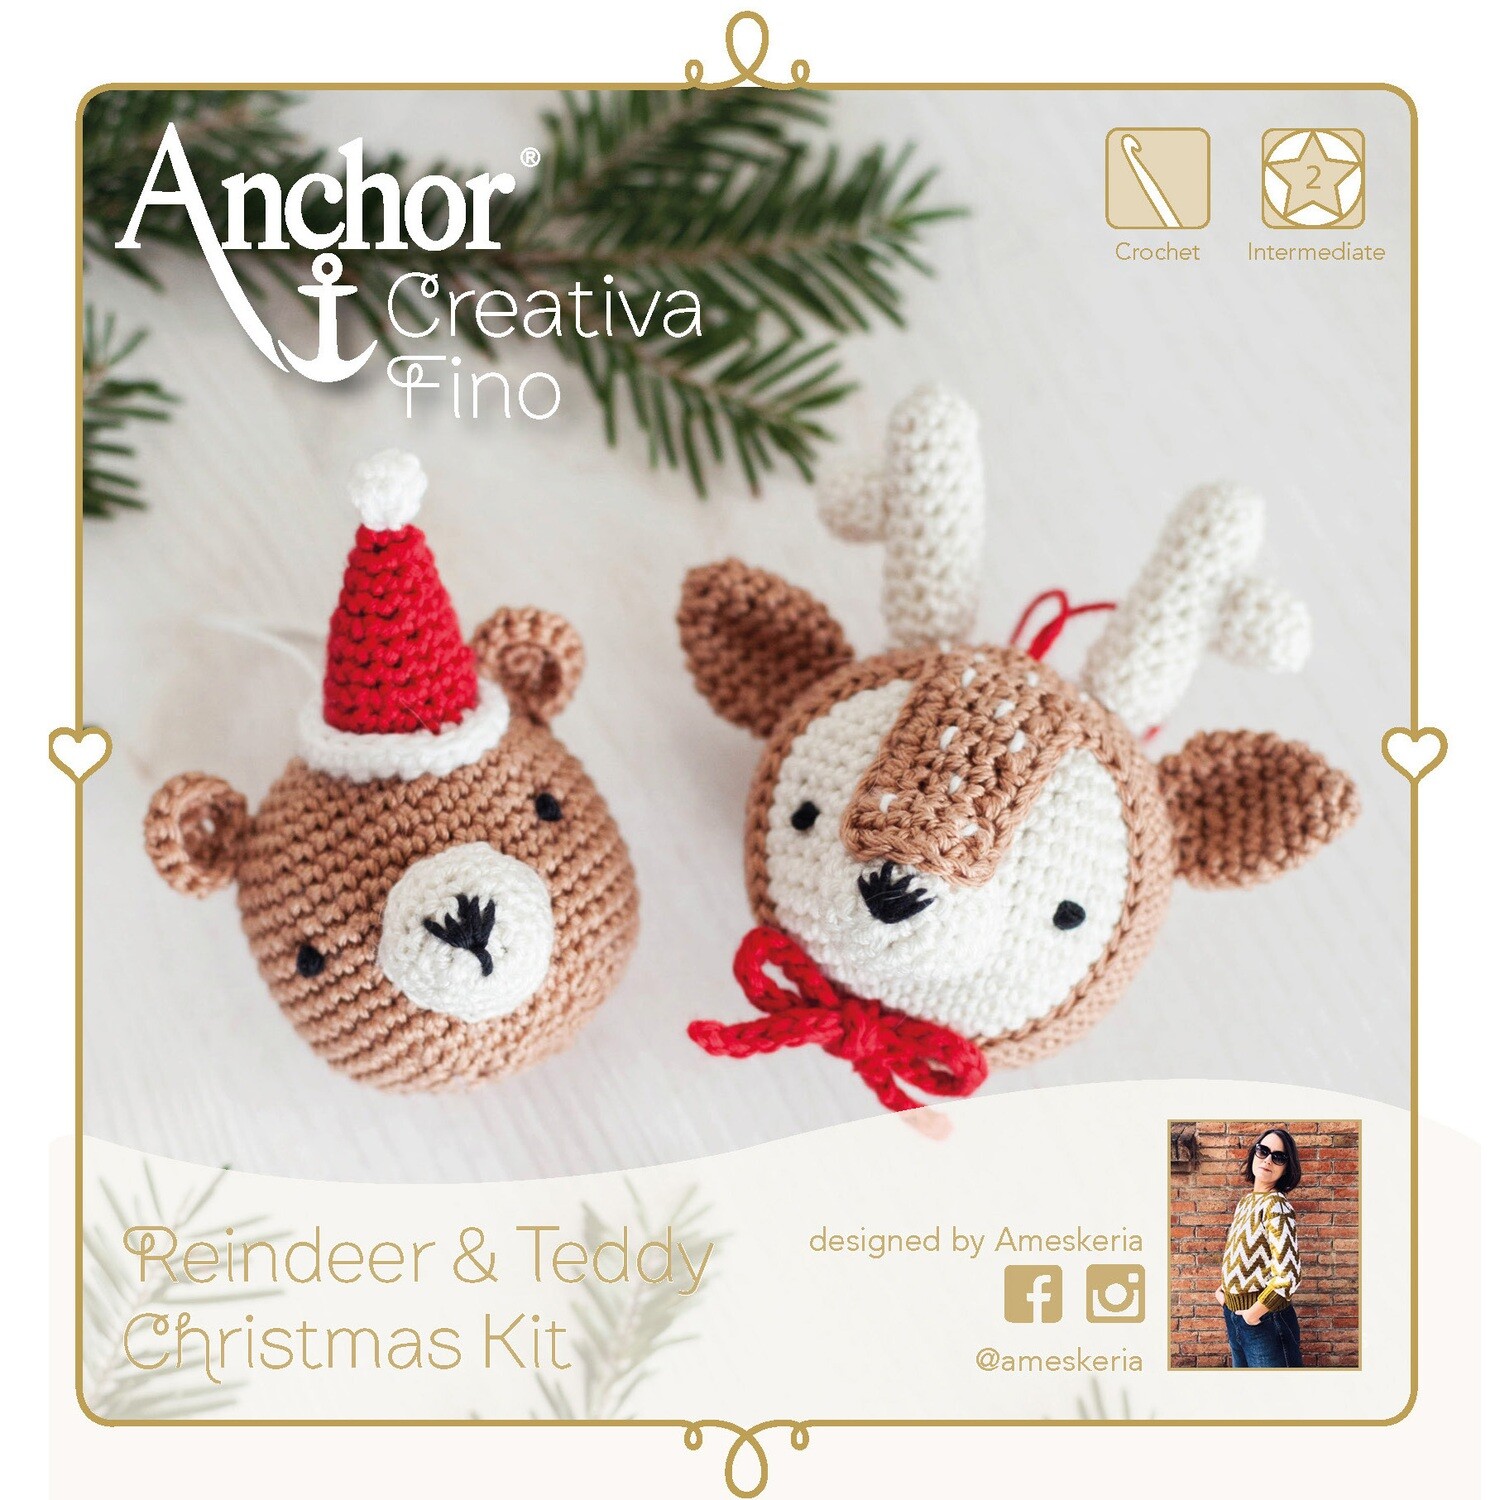 Anchor Essentials Crochet Kit - Reindeer and Teddy Christmas Kit